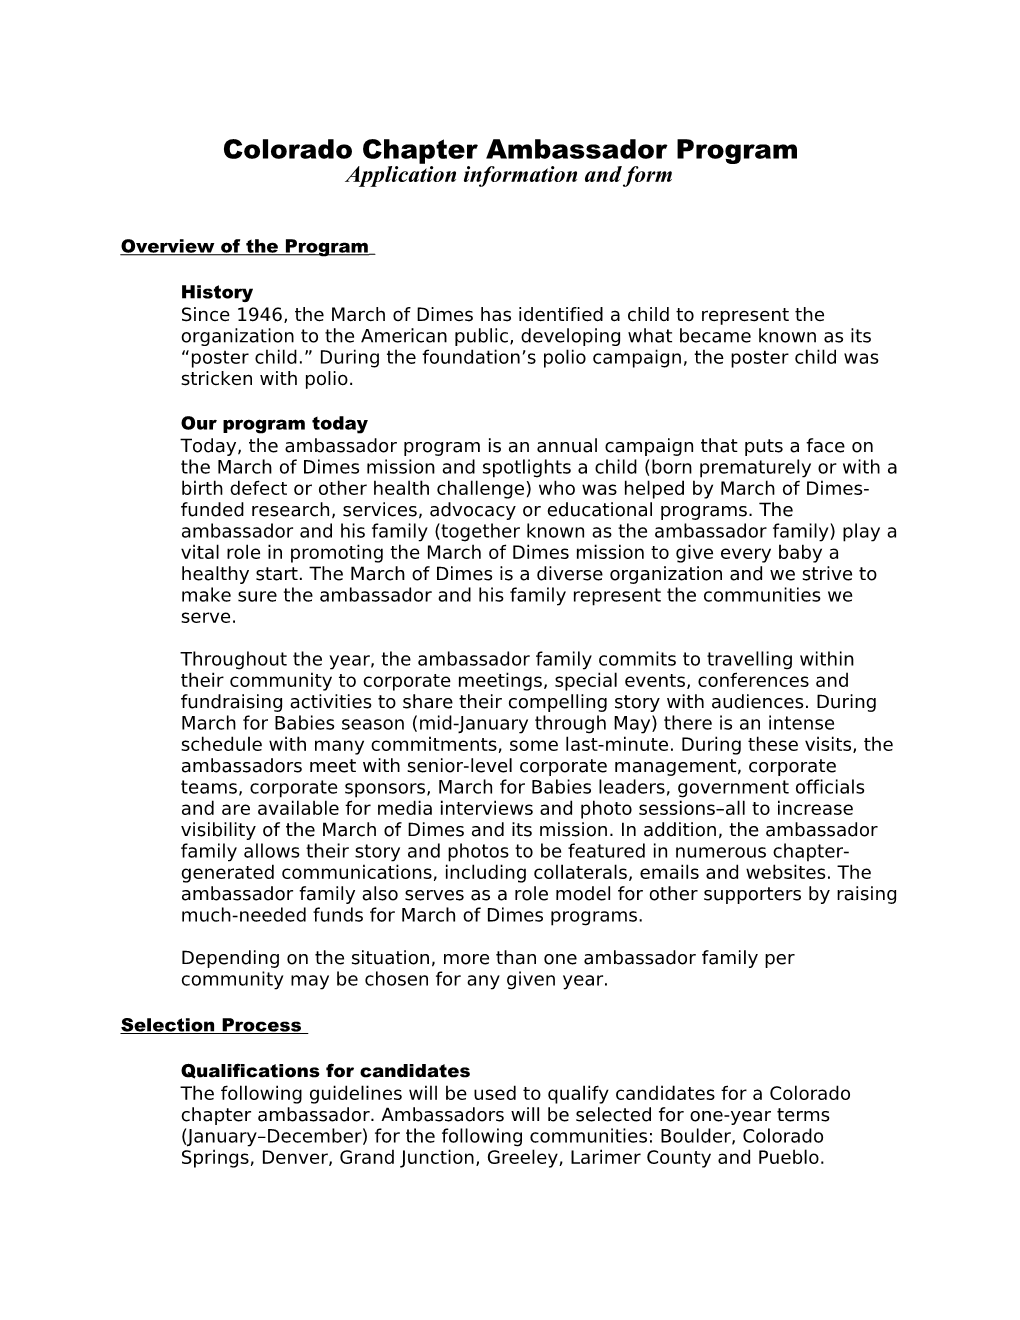 Colorado Chapter Ambassador Program Application Information and Form